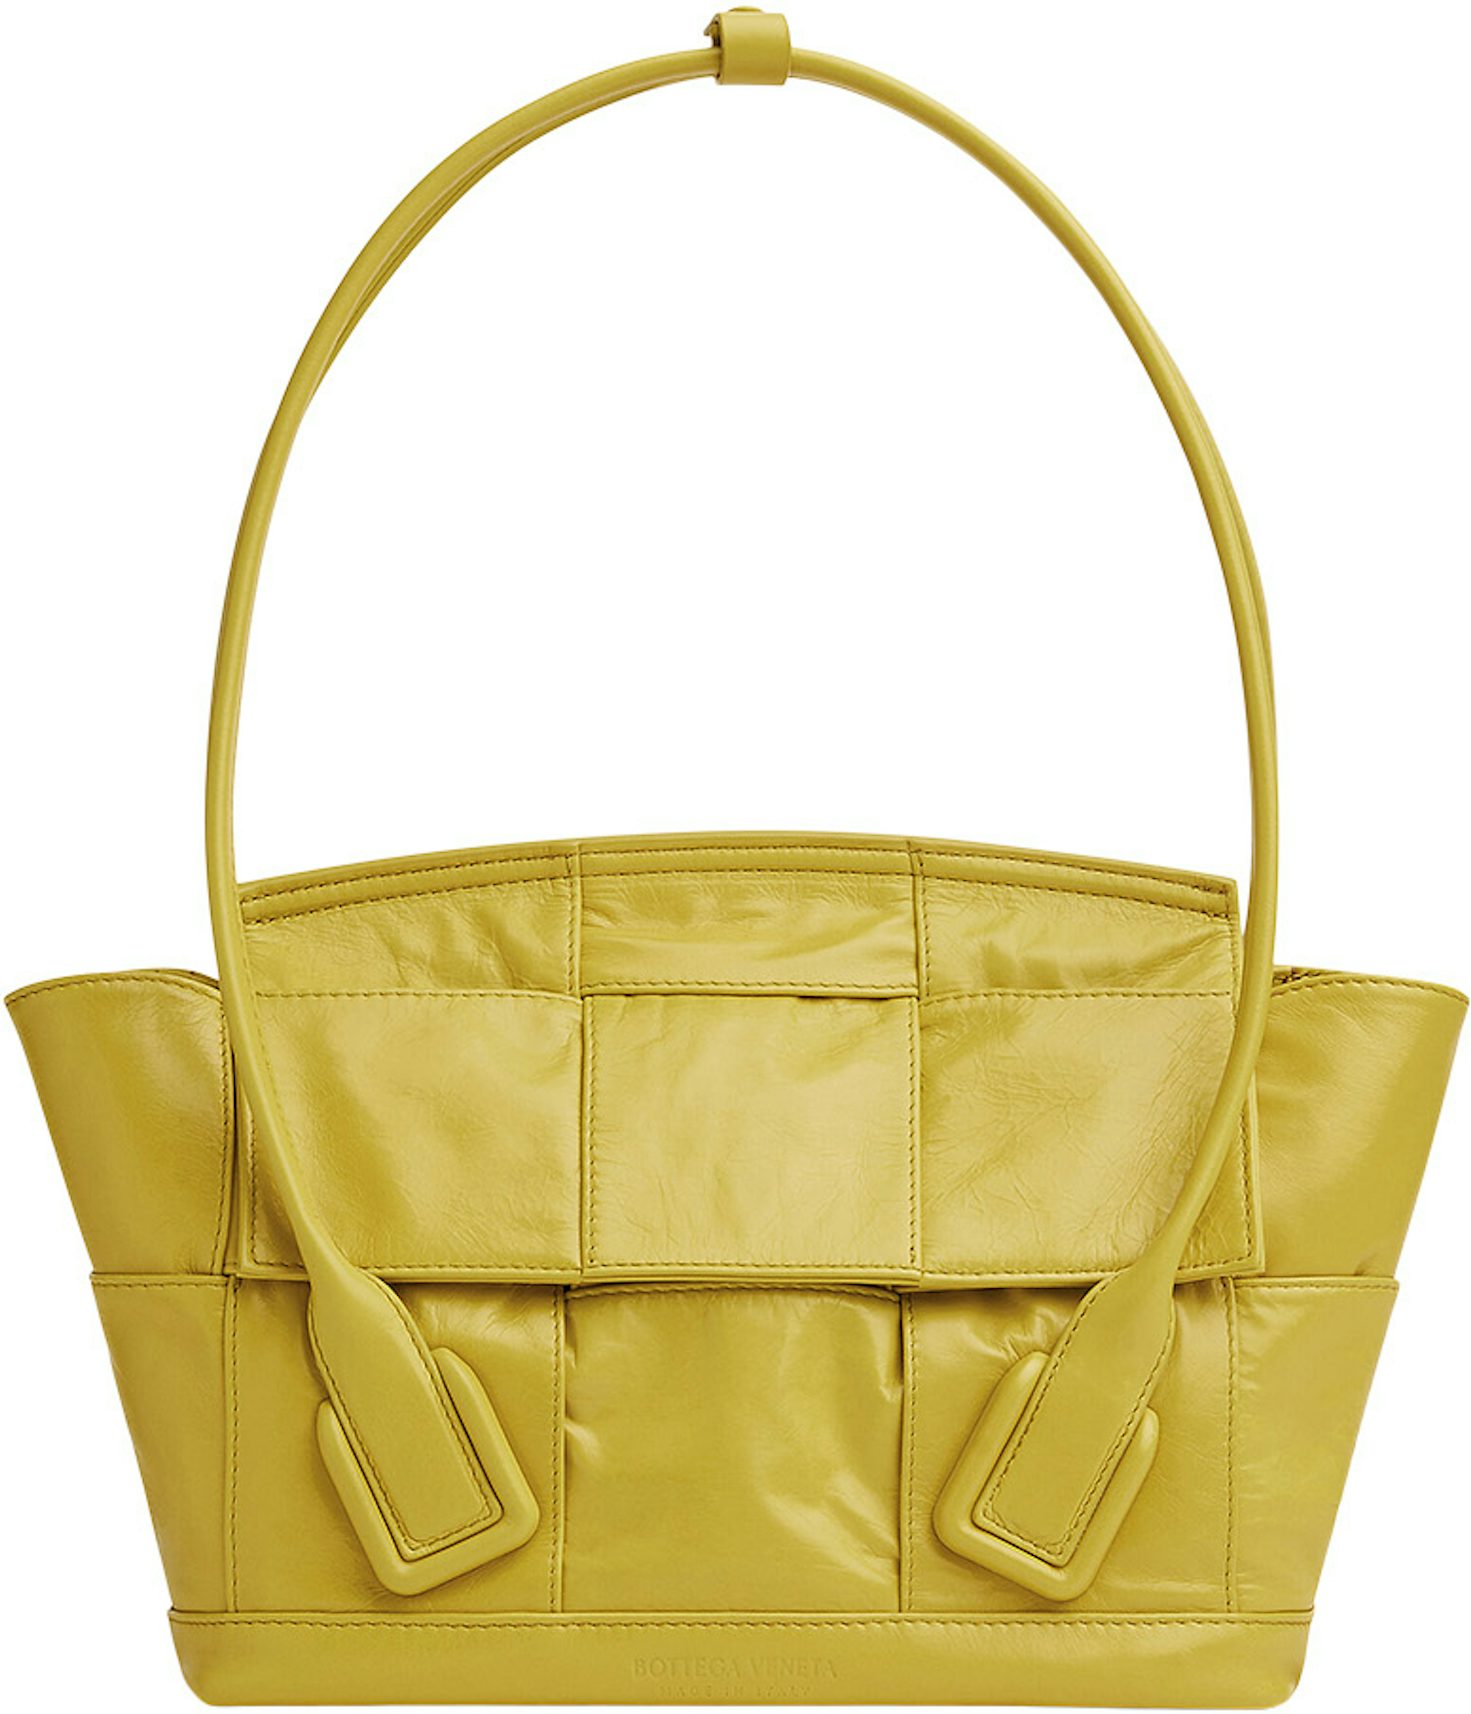 Bottega Veneta Mini Loop Shoulder Bag in Teal Washed Gold